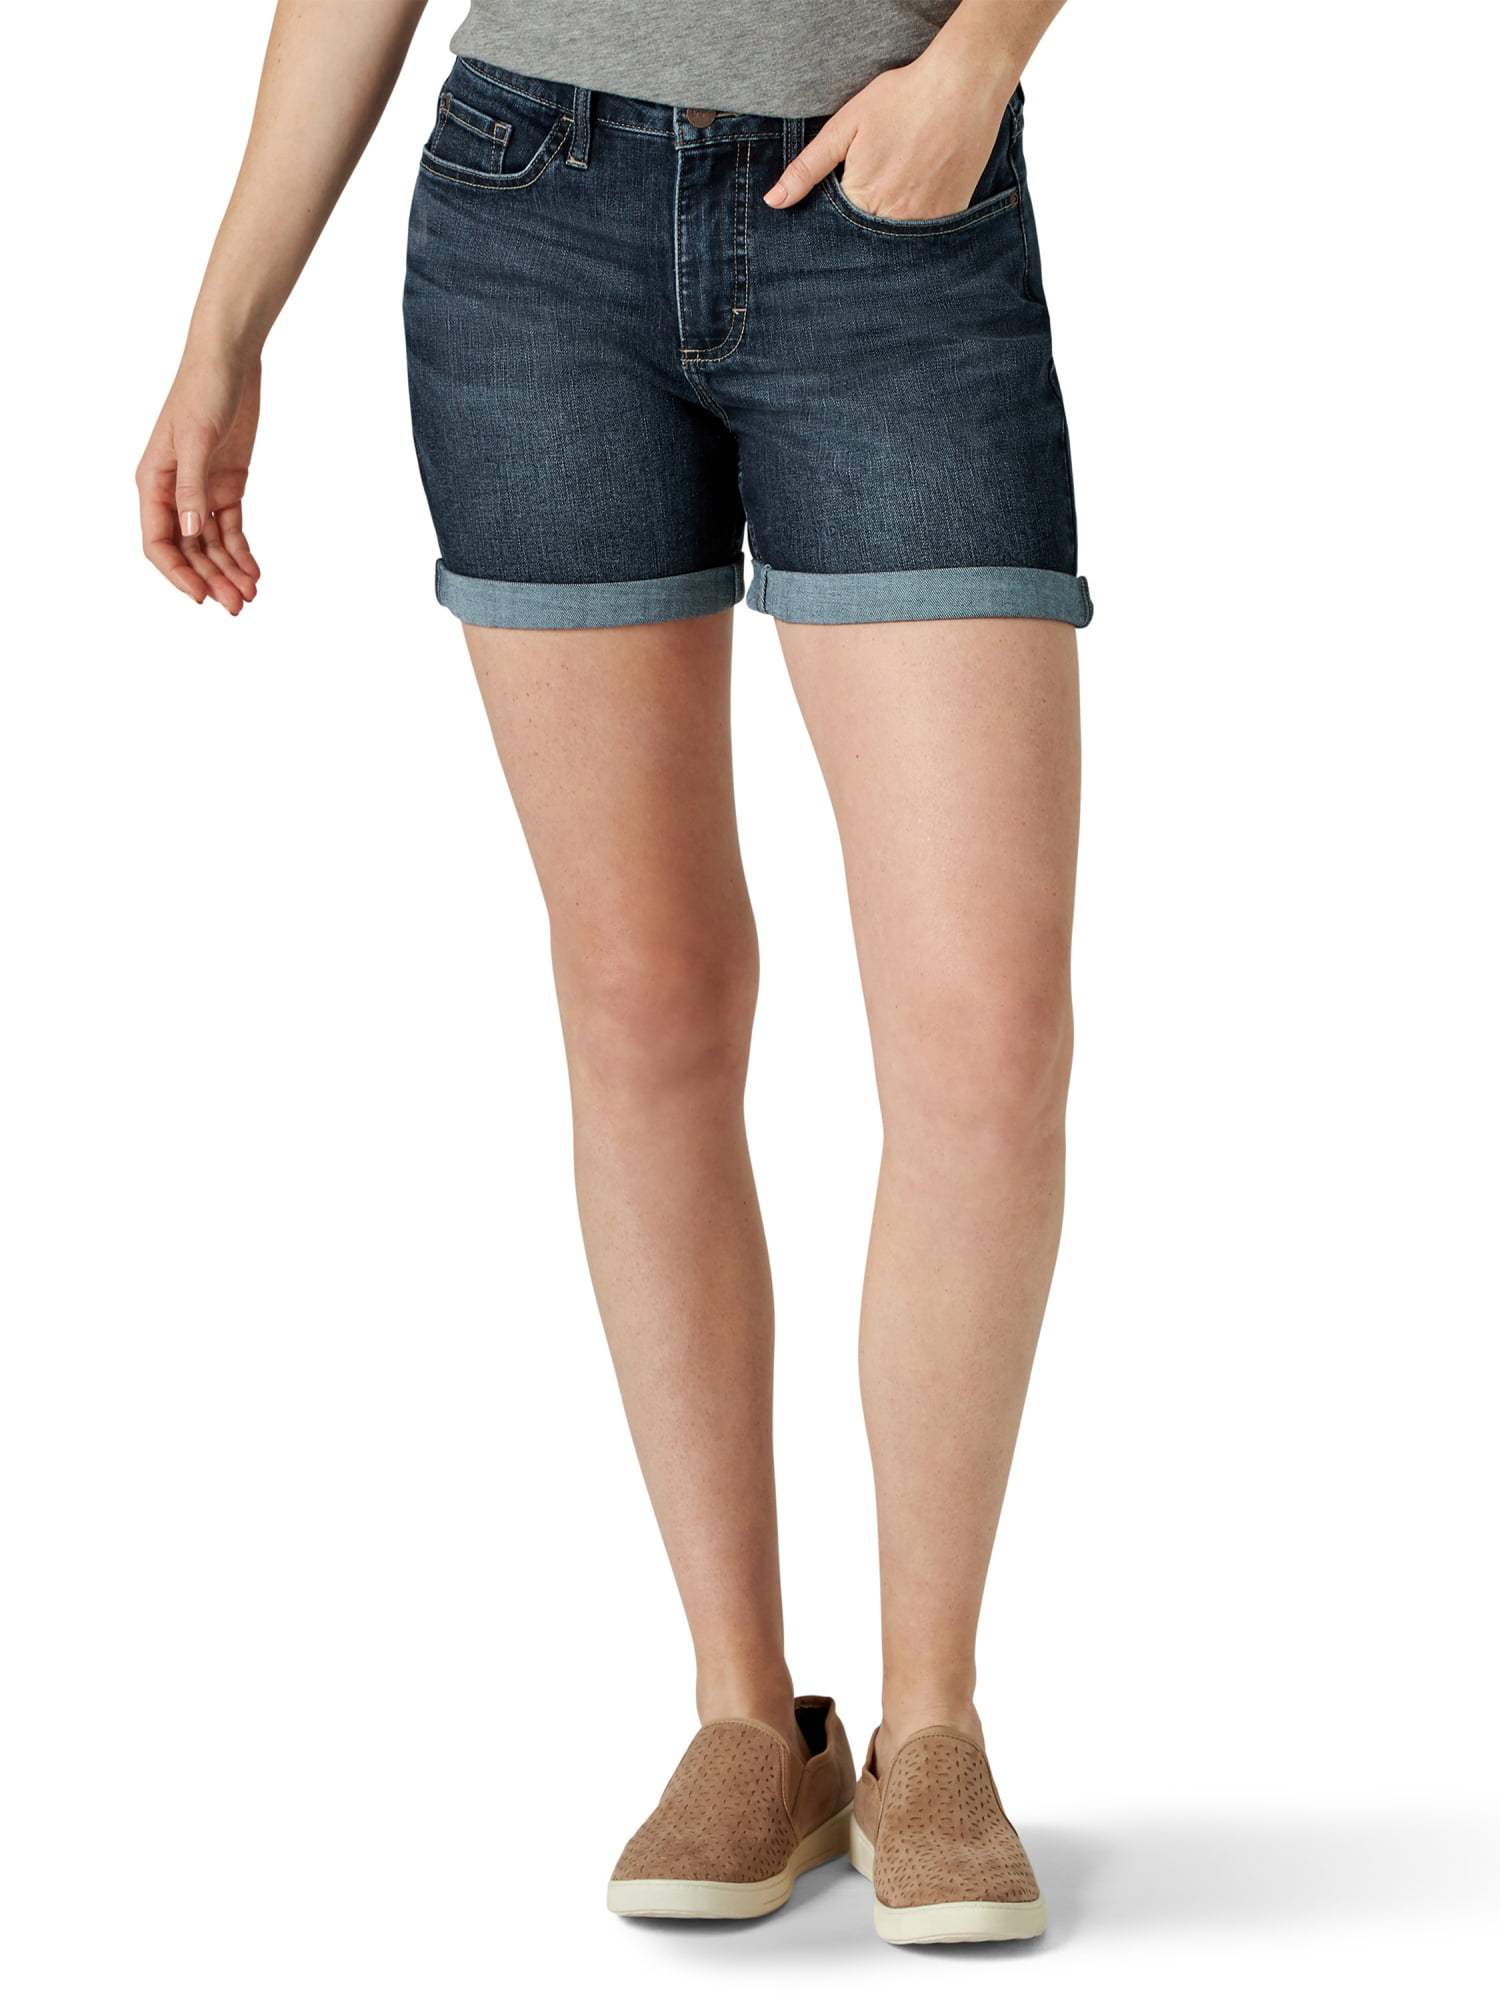 lee jean shorts womens